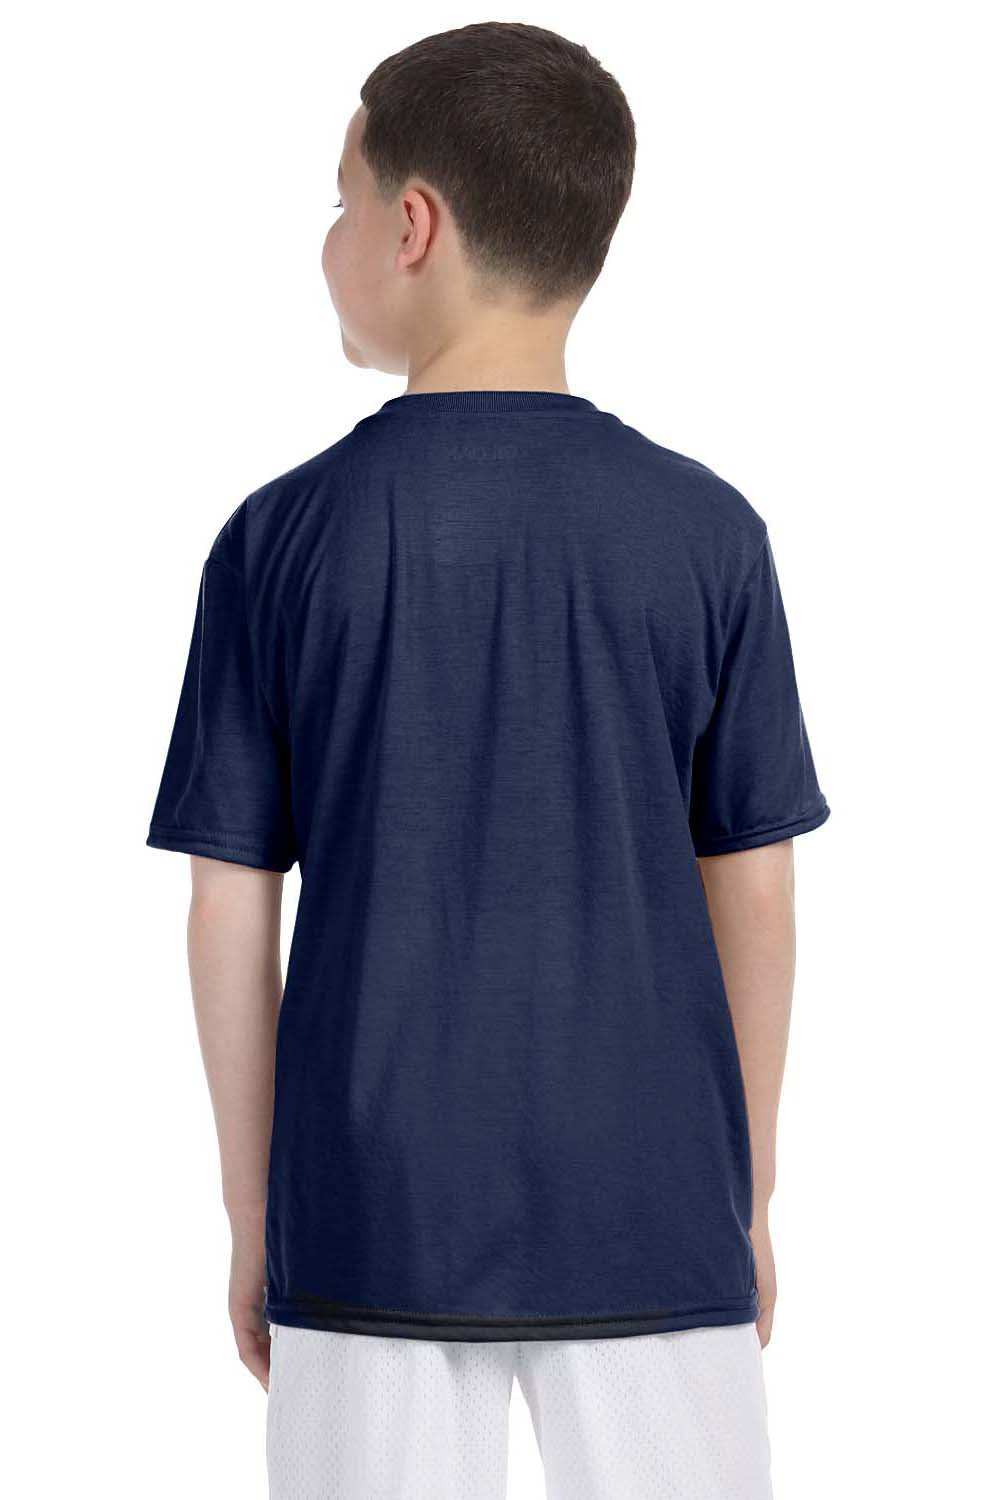 Gildan G420B Youth Performance Jersey Moisture Wicking Short Sleeve Crewneck T-Shirt Navy Blue Back